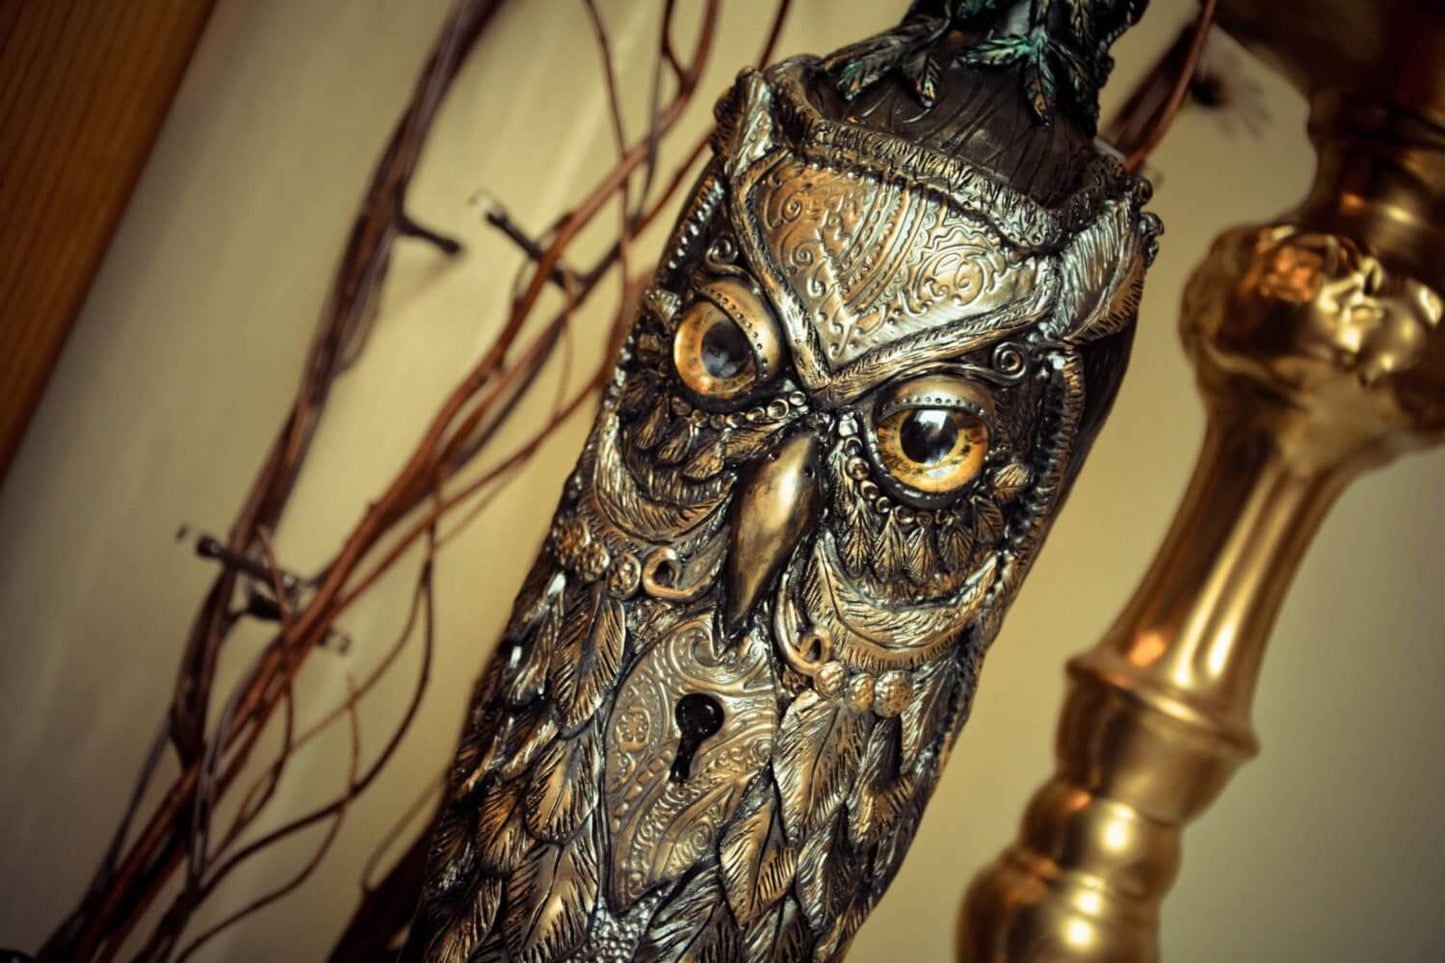 Table lamp | Owl Table lamp | bedside lamp RishStudio